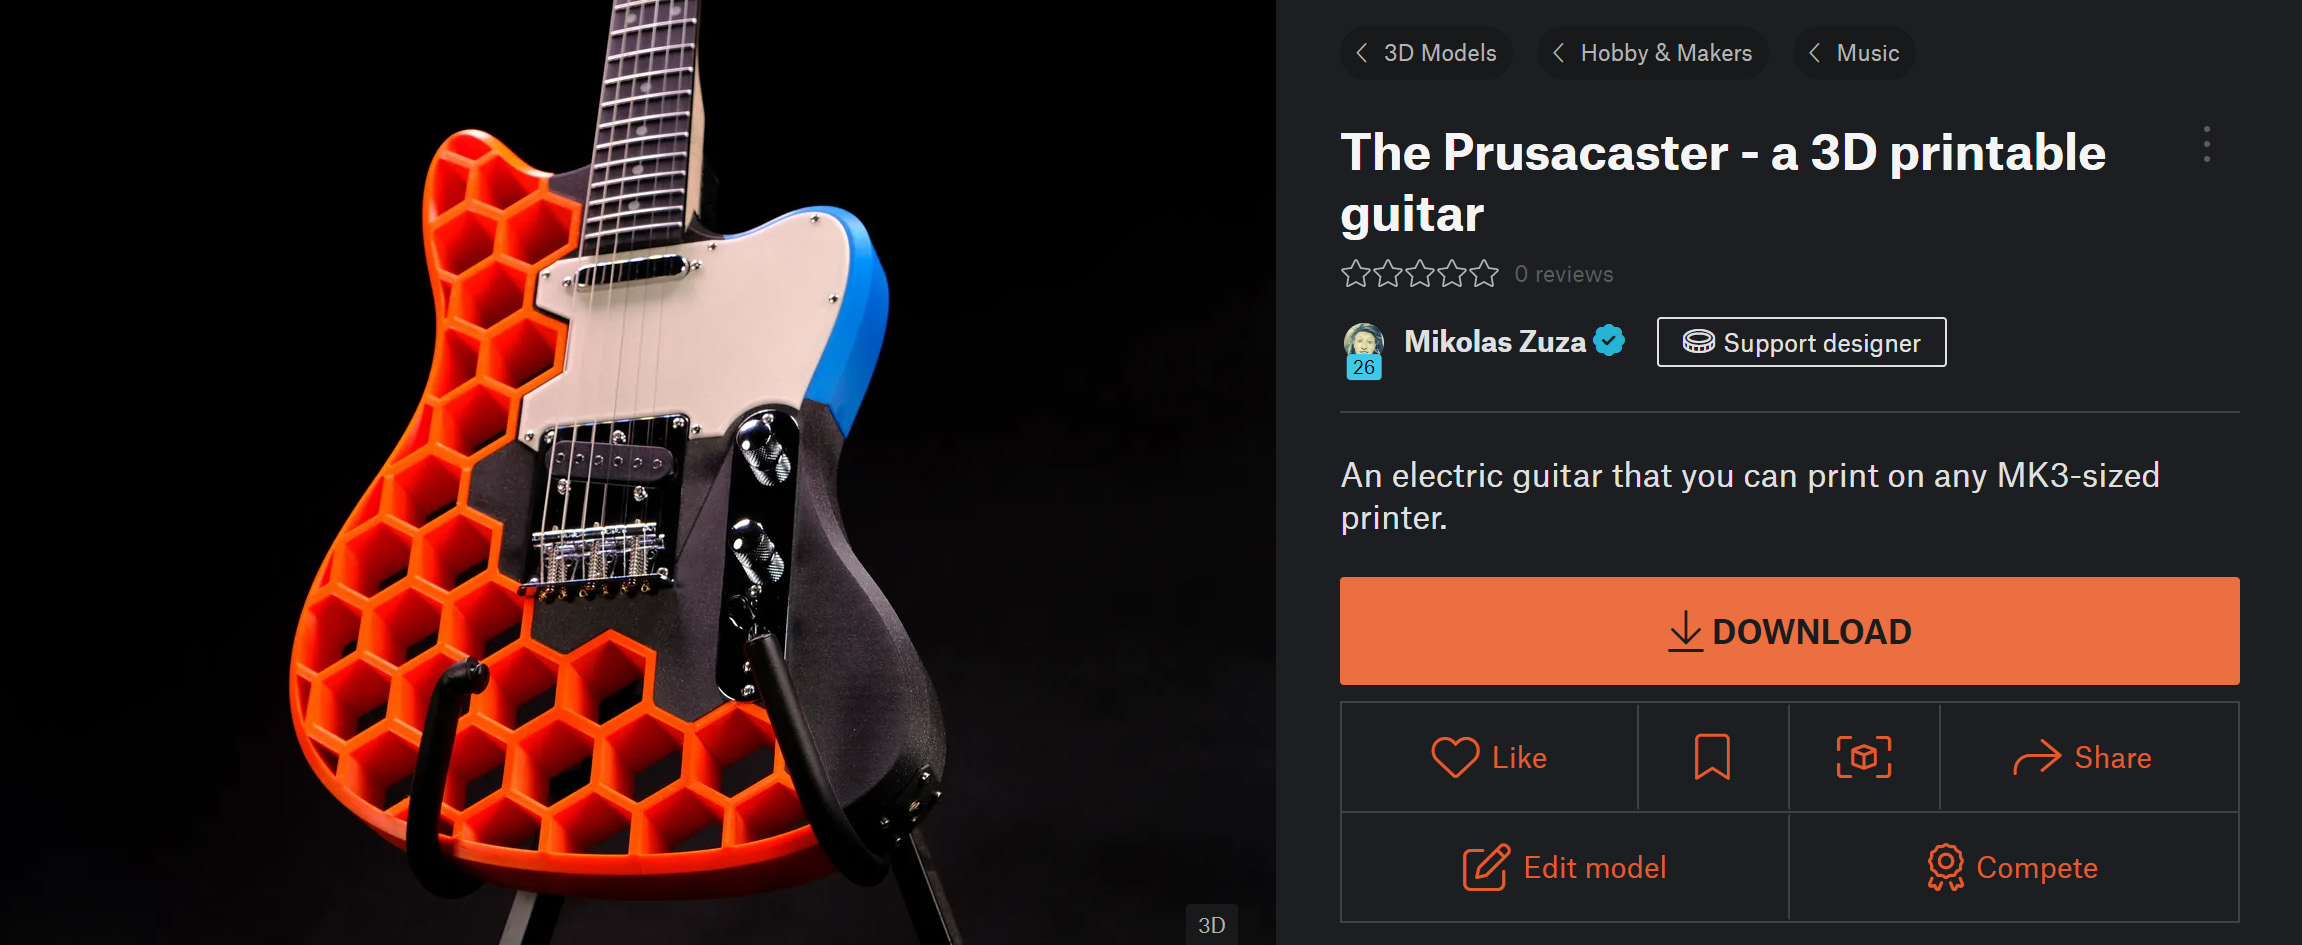 Perforering Har det dårligt Ledningsevne The Prusacaster - How to Design and 3D Print an Electric Guitar that plays  well